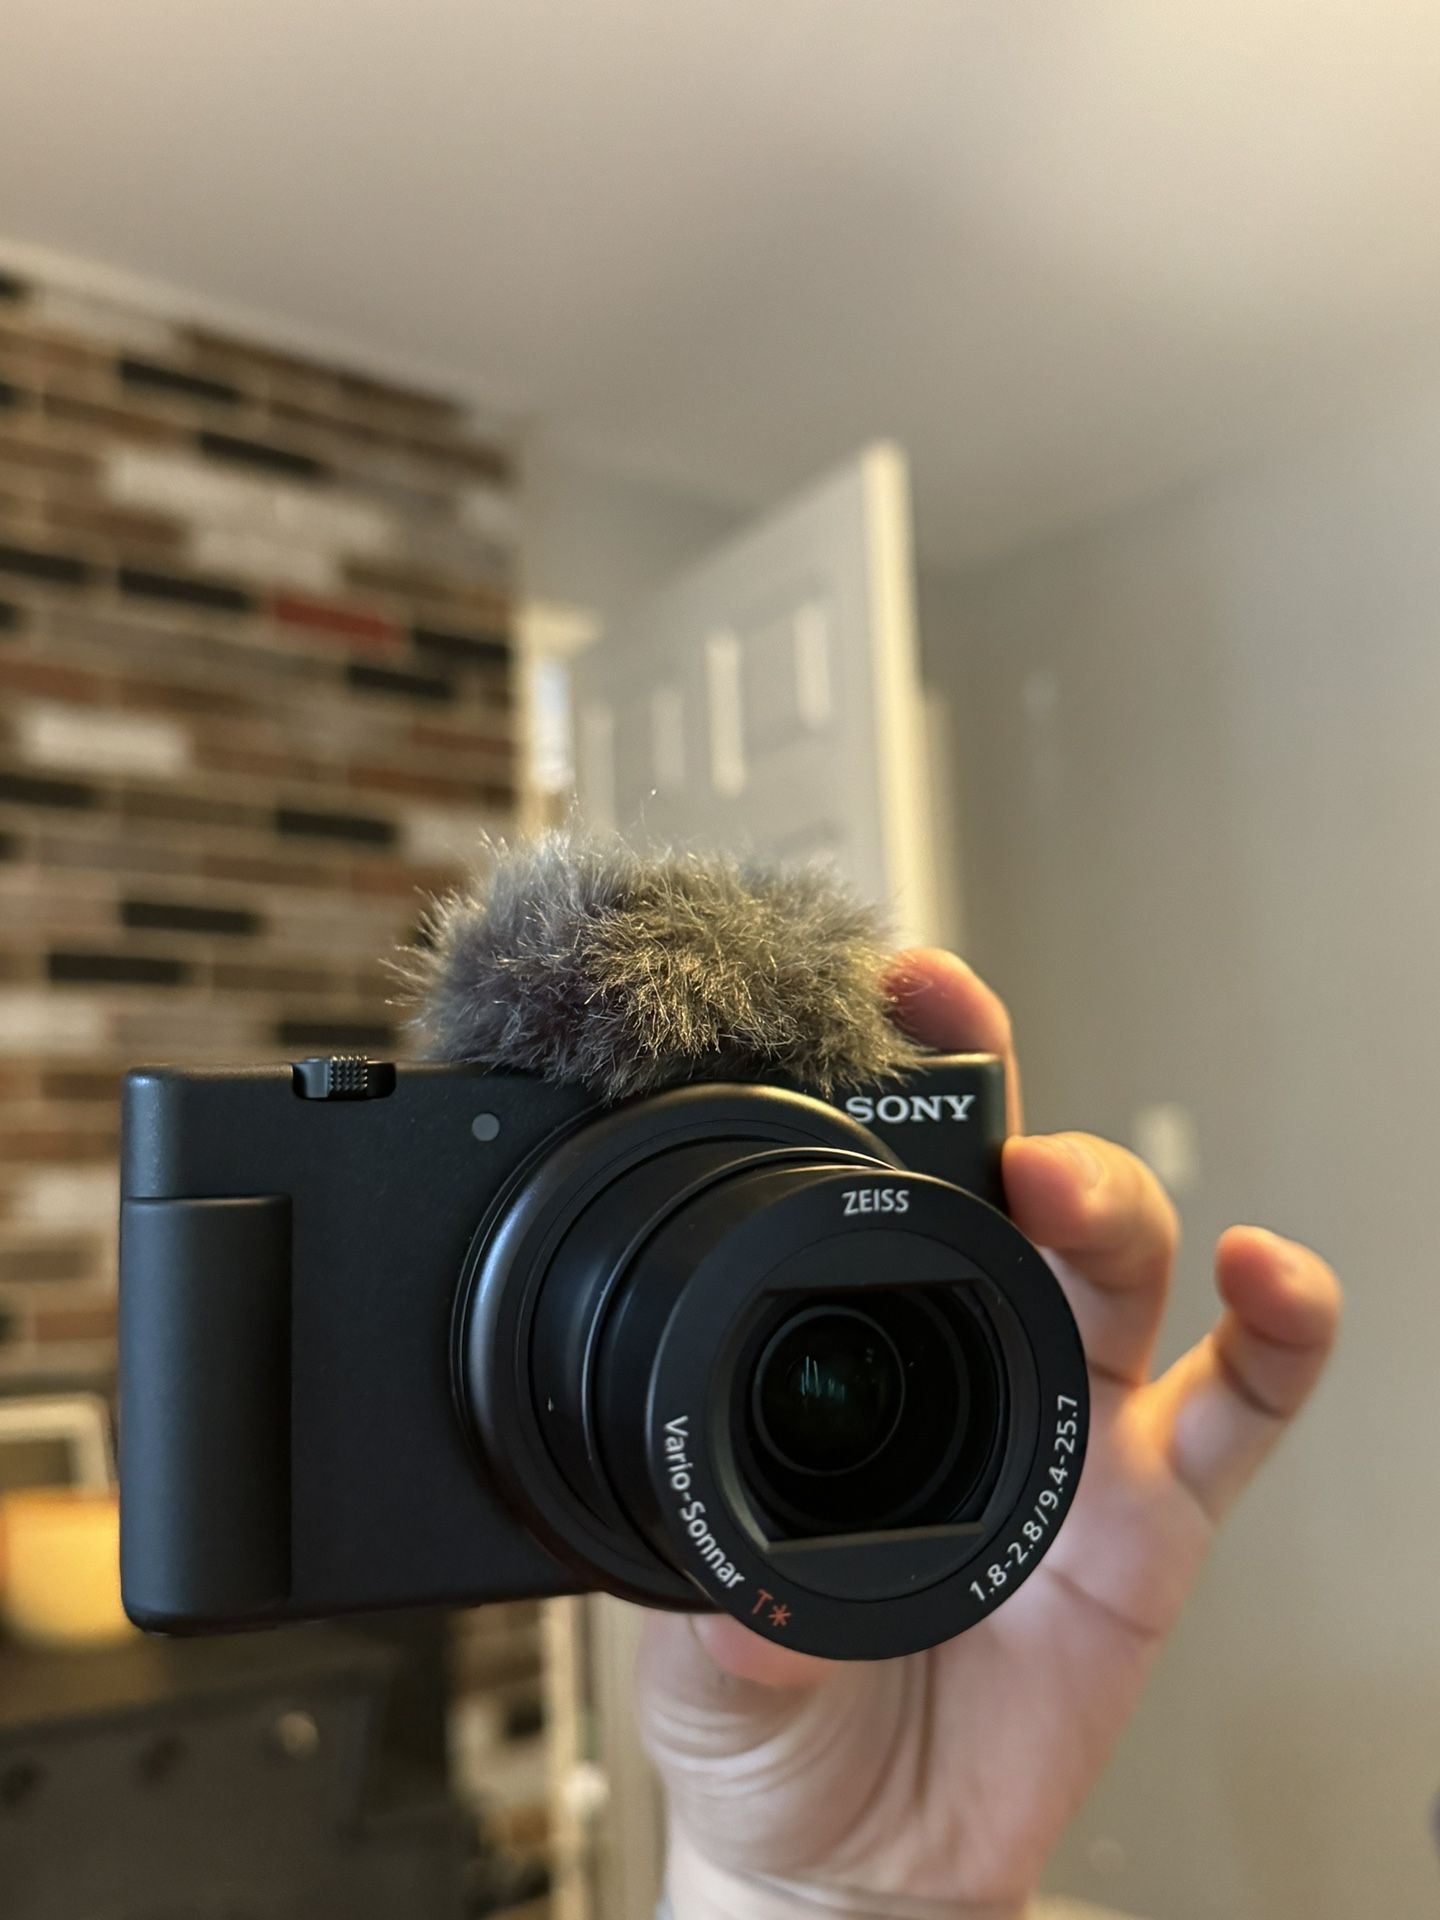 Sony Zv1 Camera 